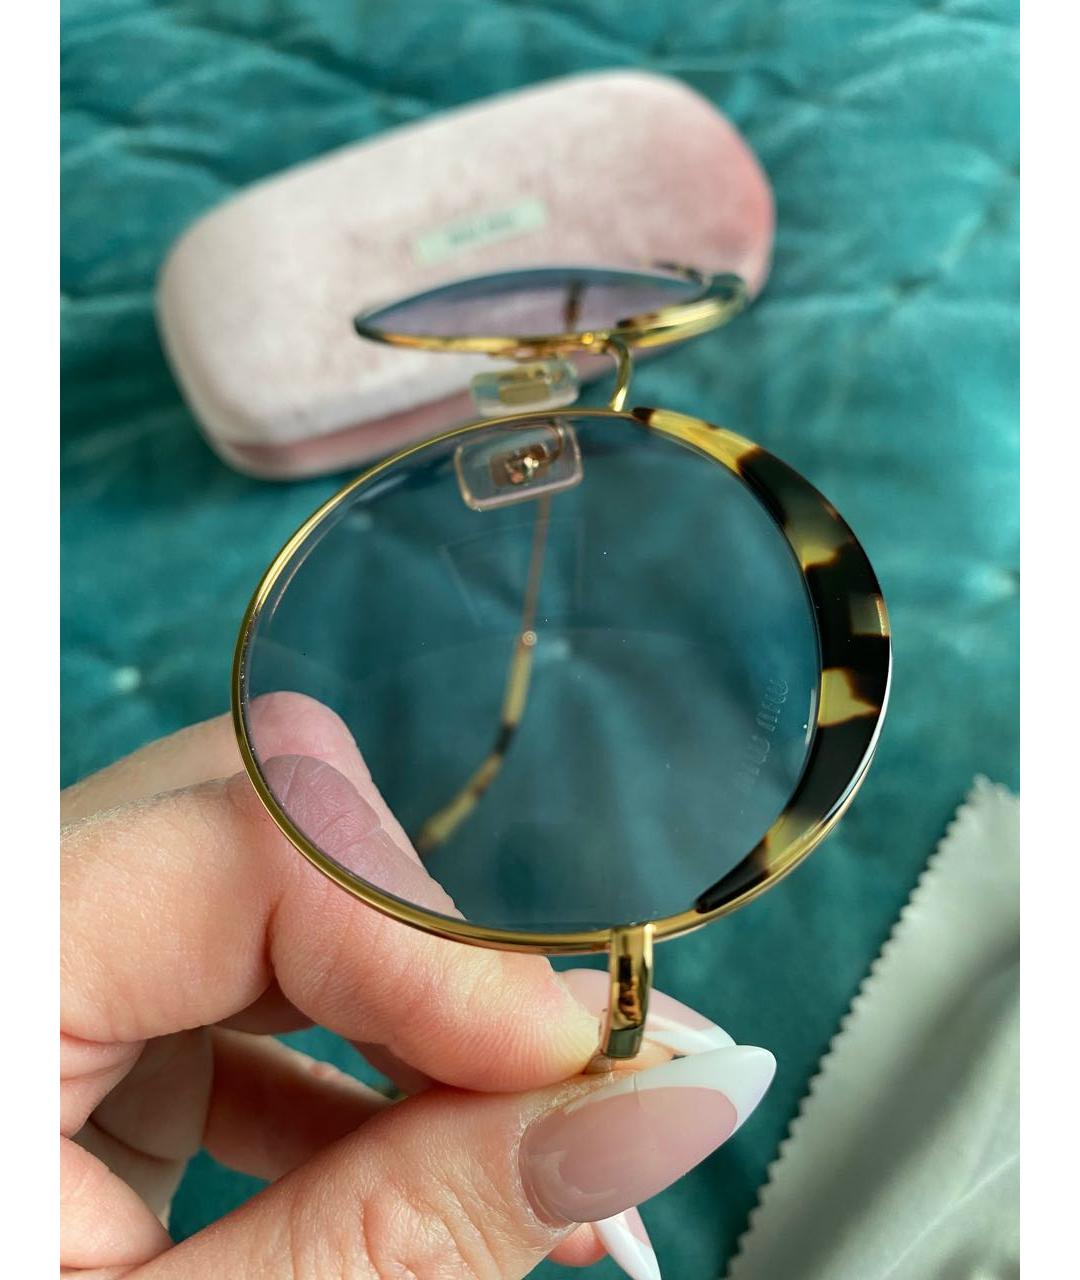 MIU MIU Золотые металлические солнцезащитные очки, фото 3